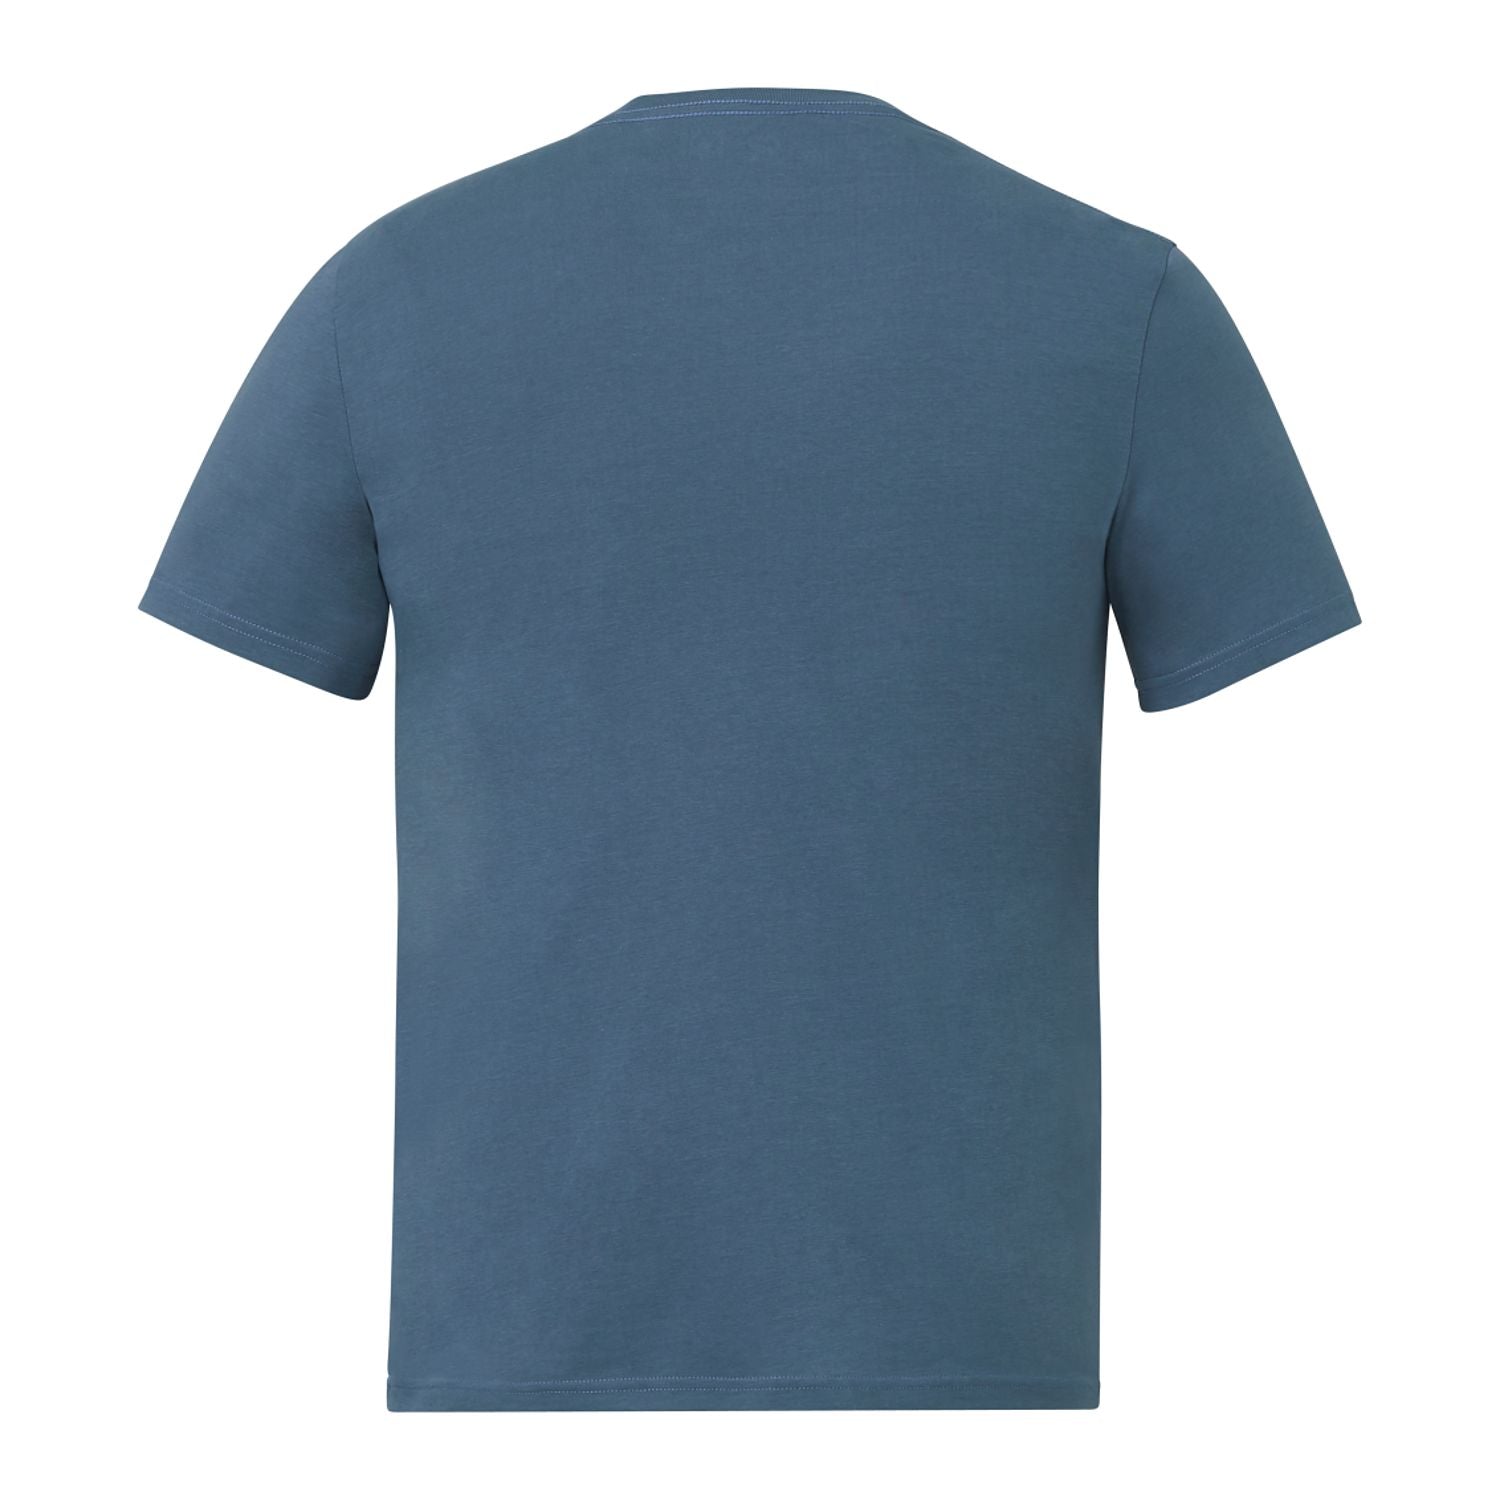 Customizable Tentree men's organic cotton short sleeve tee in vintage blue.